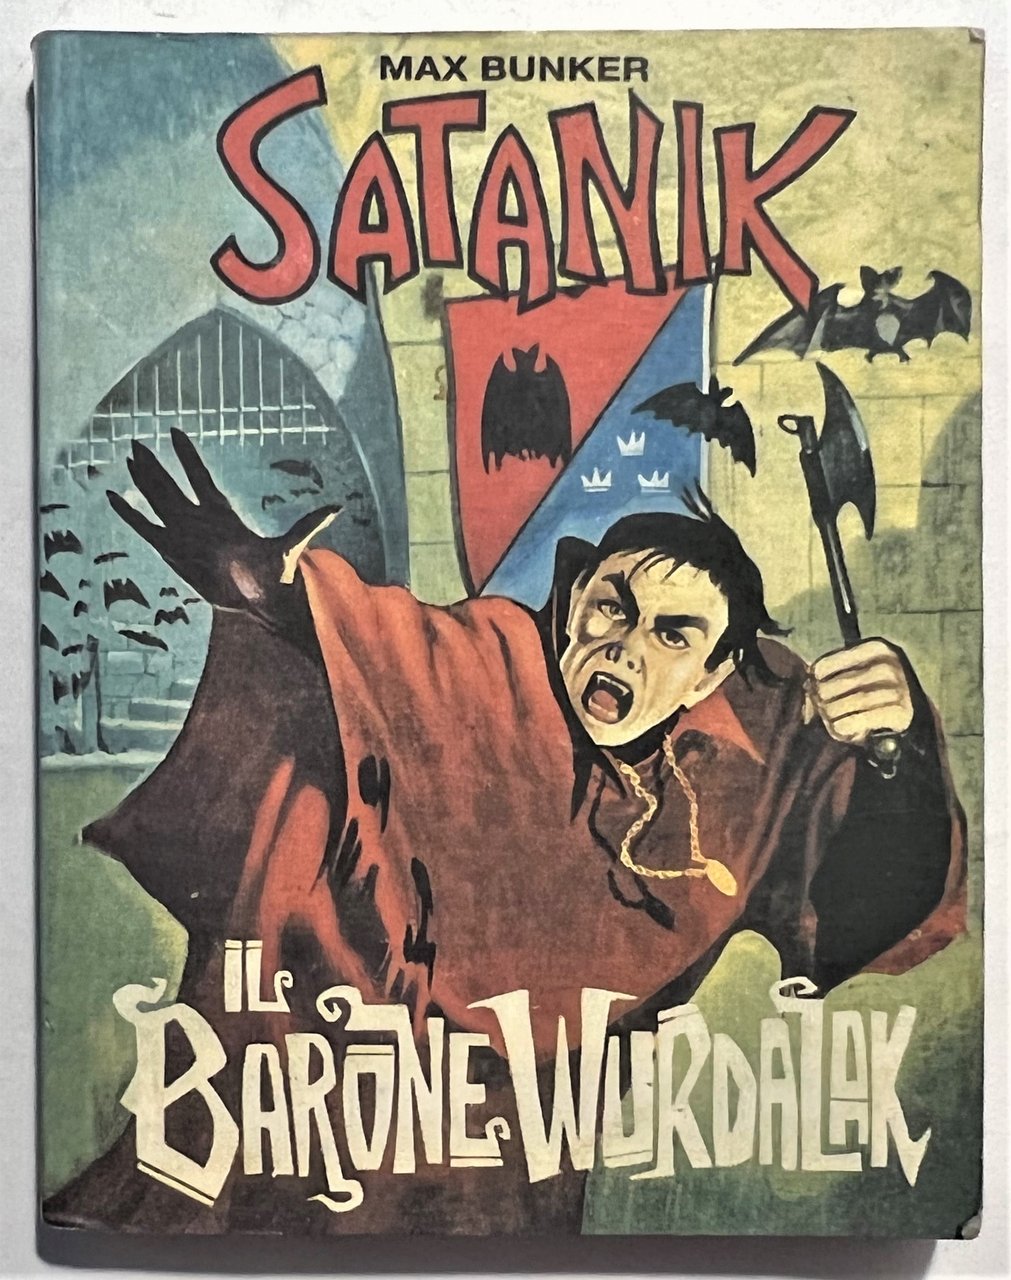 Fumetto Tascabile - M. Bunker - Satanik: Il Barone Wurdalak …